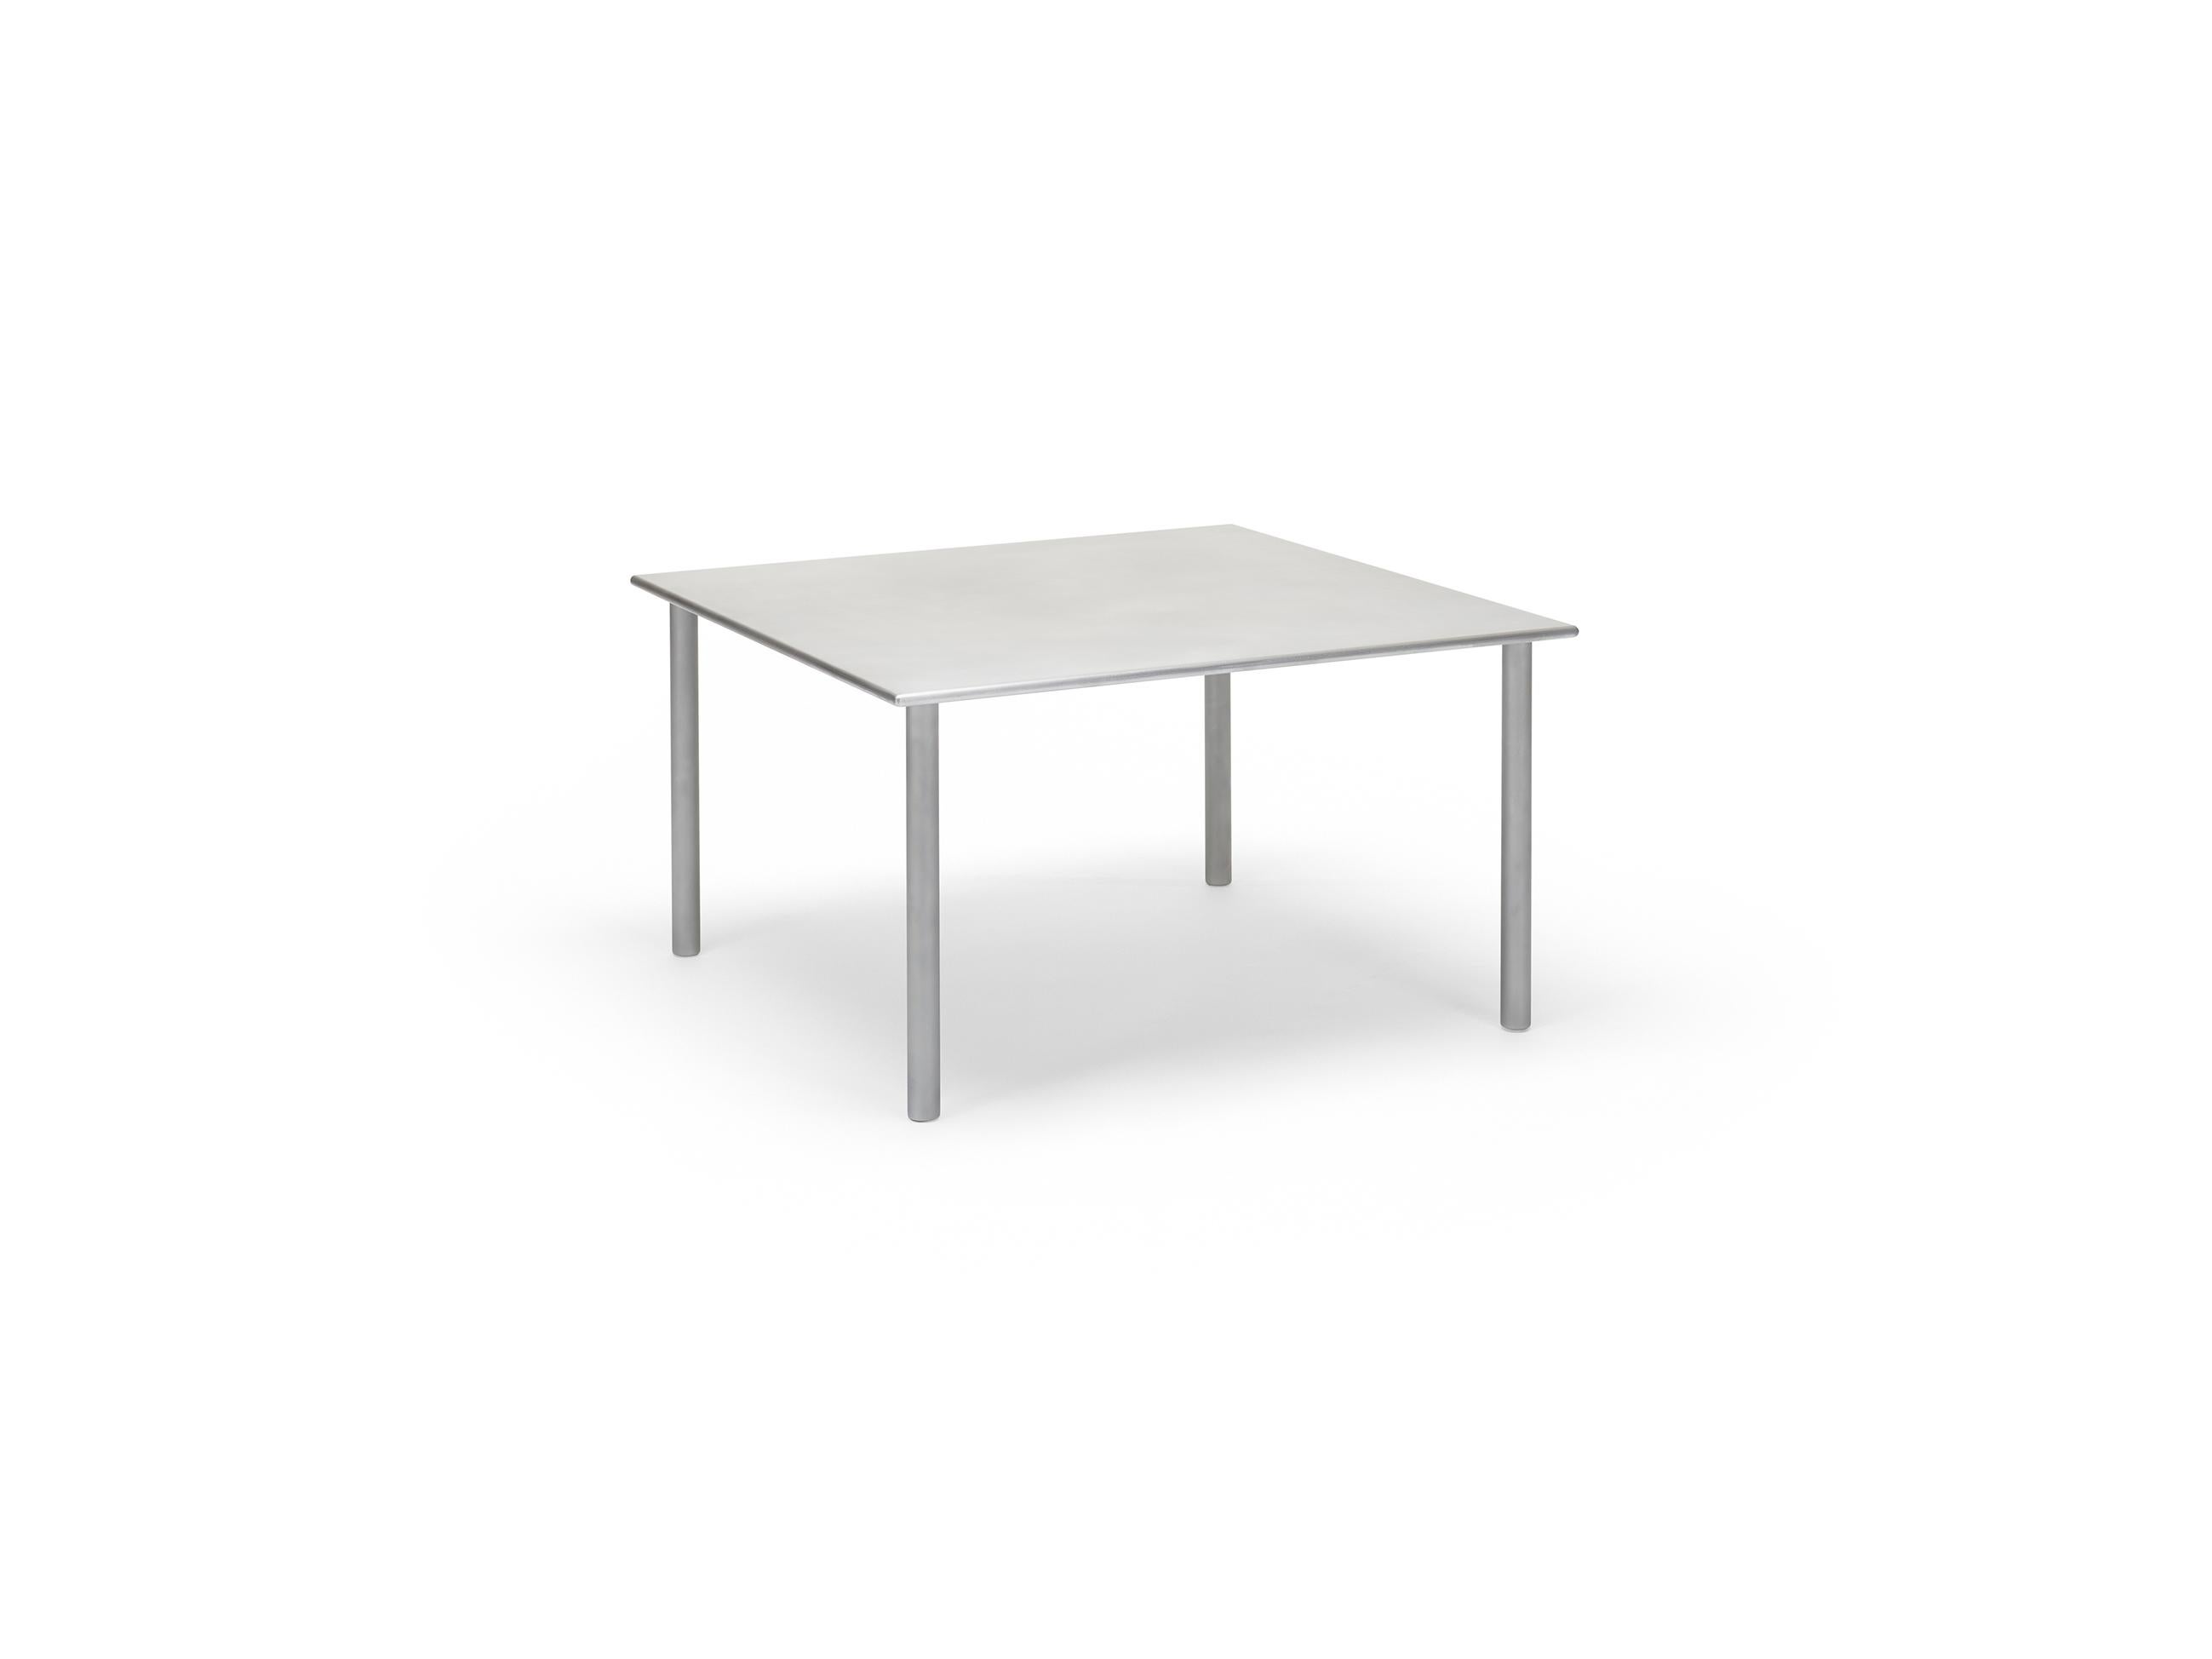 Minimalist S.C.T. 'Square, Circle, Triangle' Aluminium Table by Jonathan Nesci 'Square' For Sale